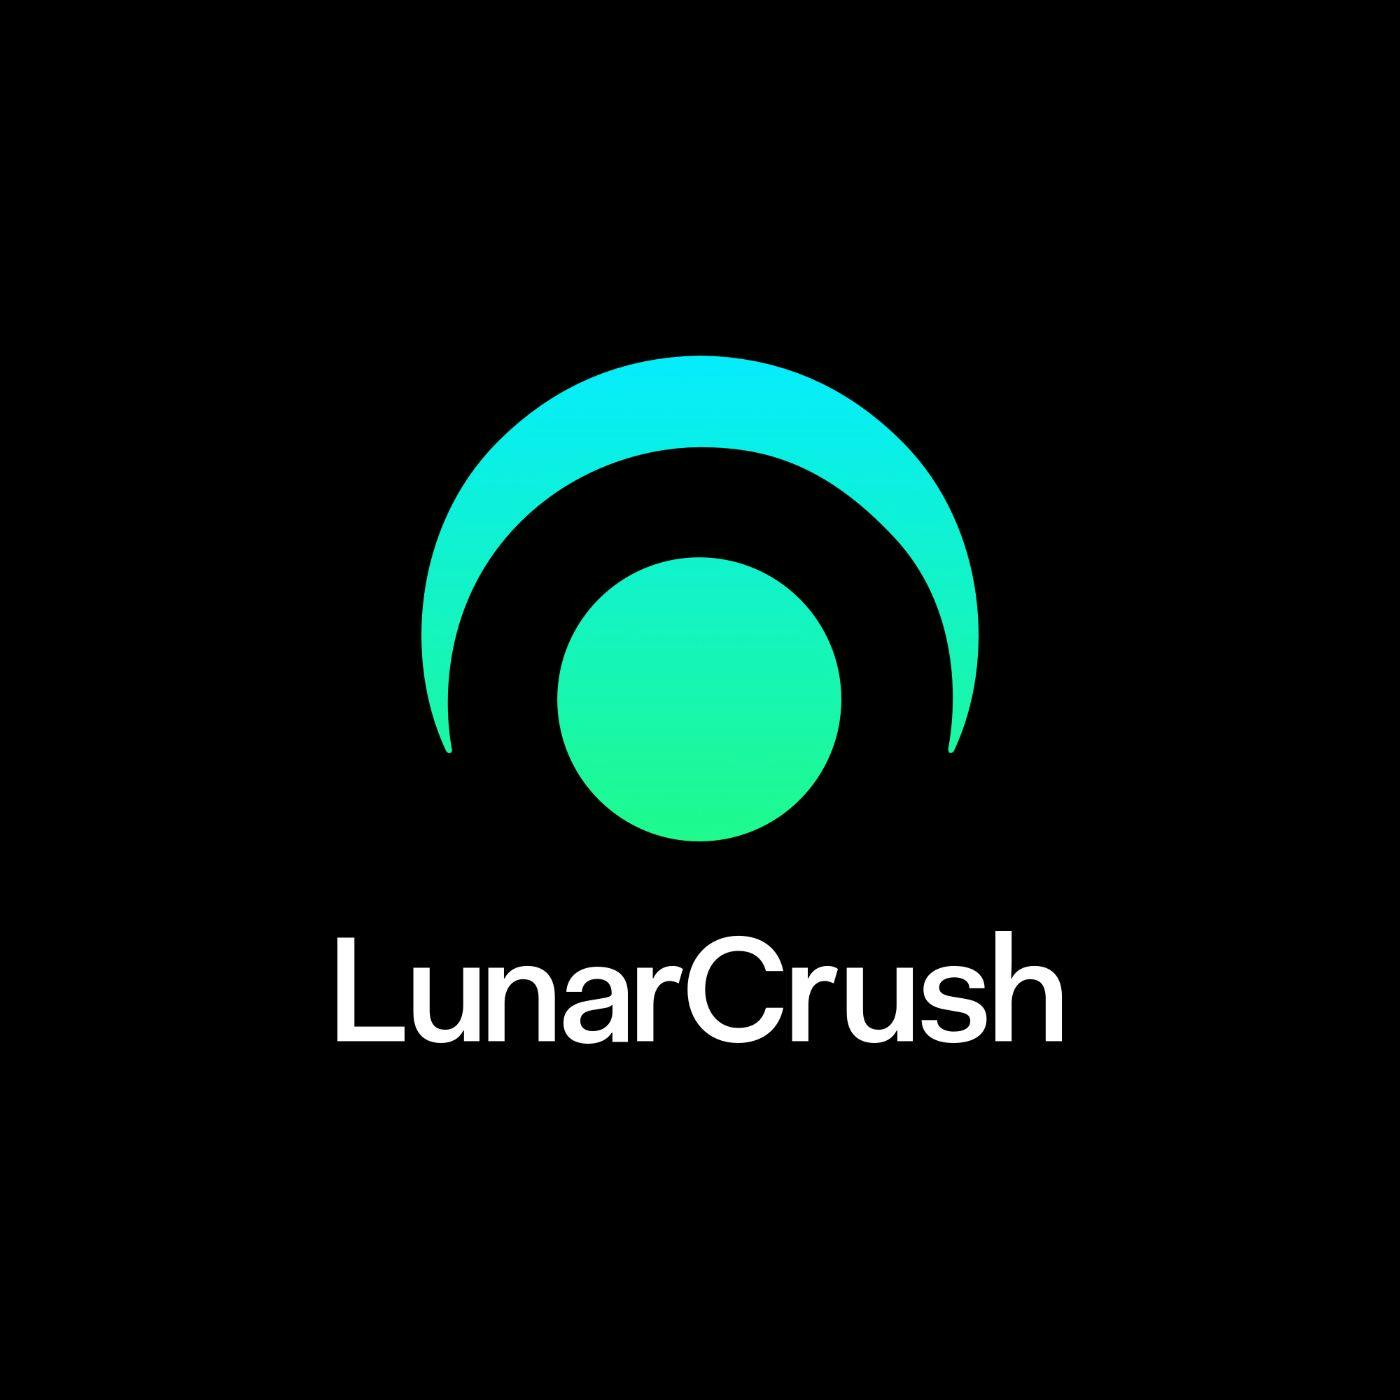 LunarCrush HackerNoon profile picture